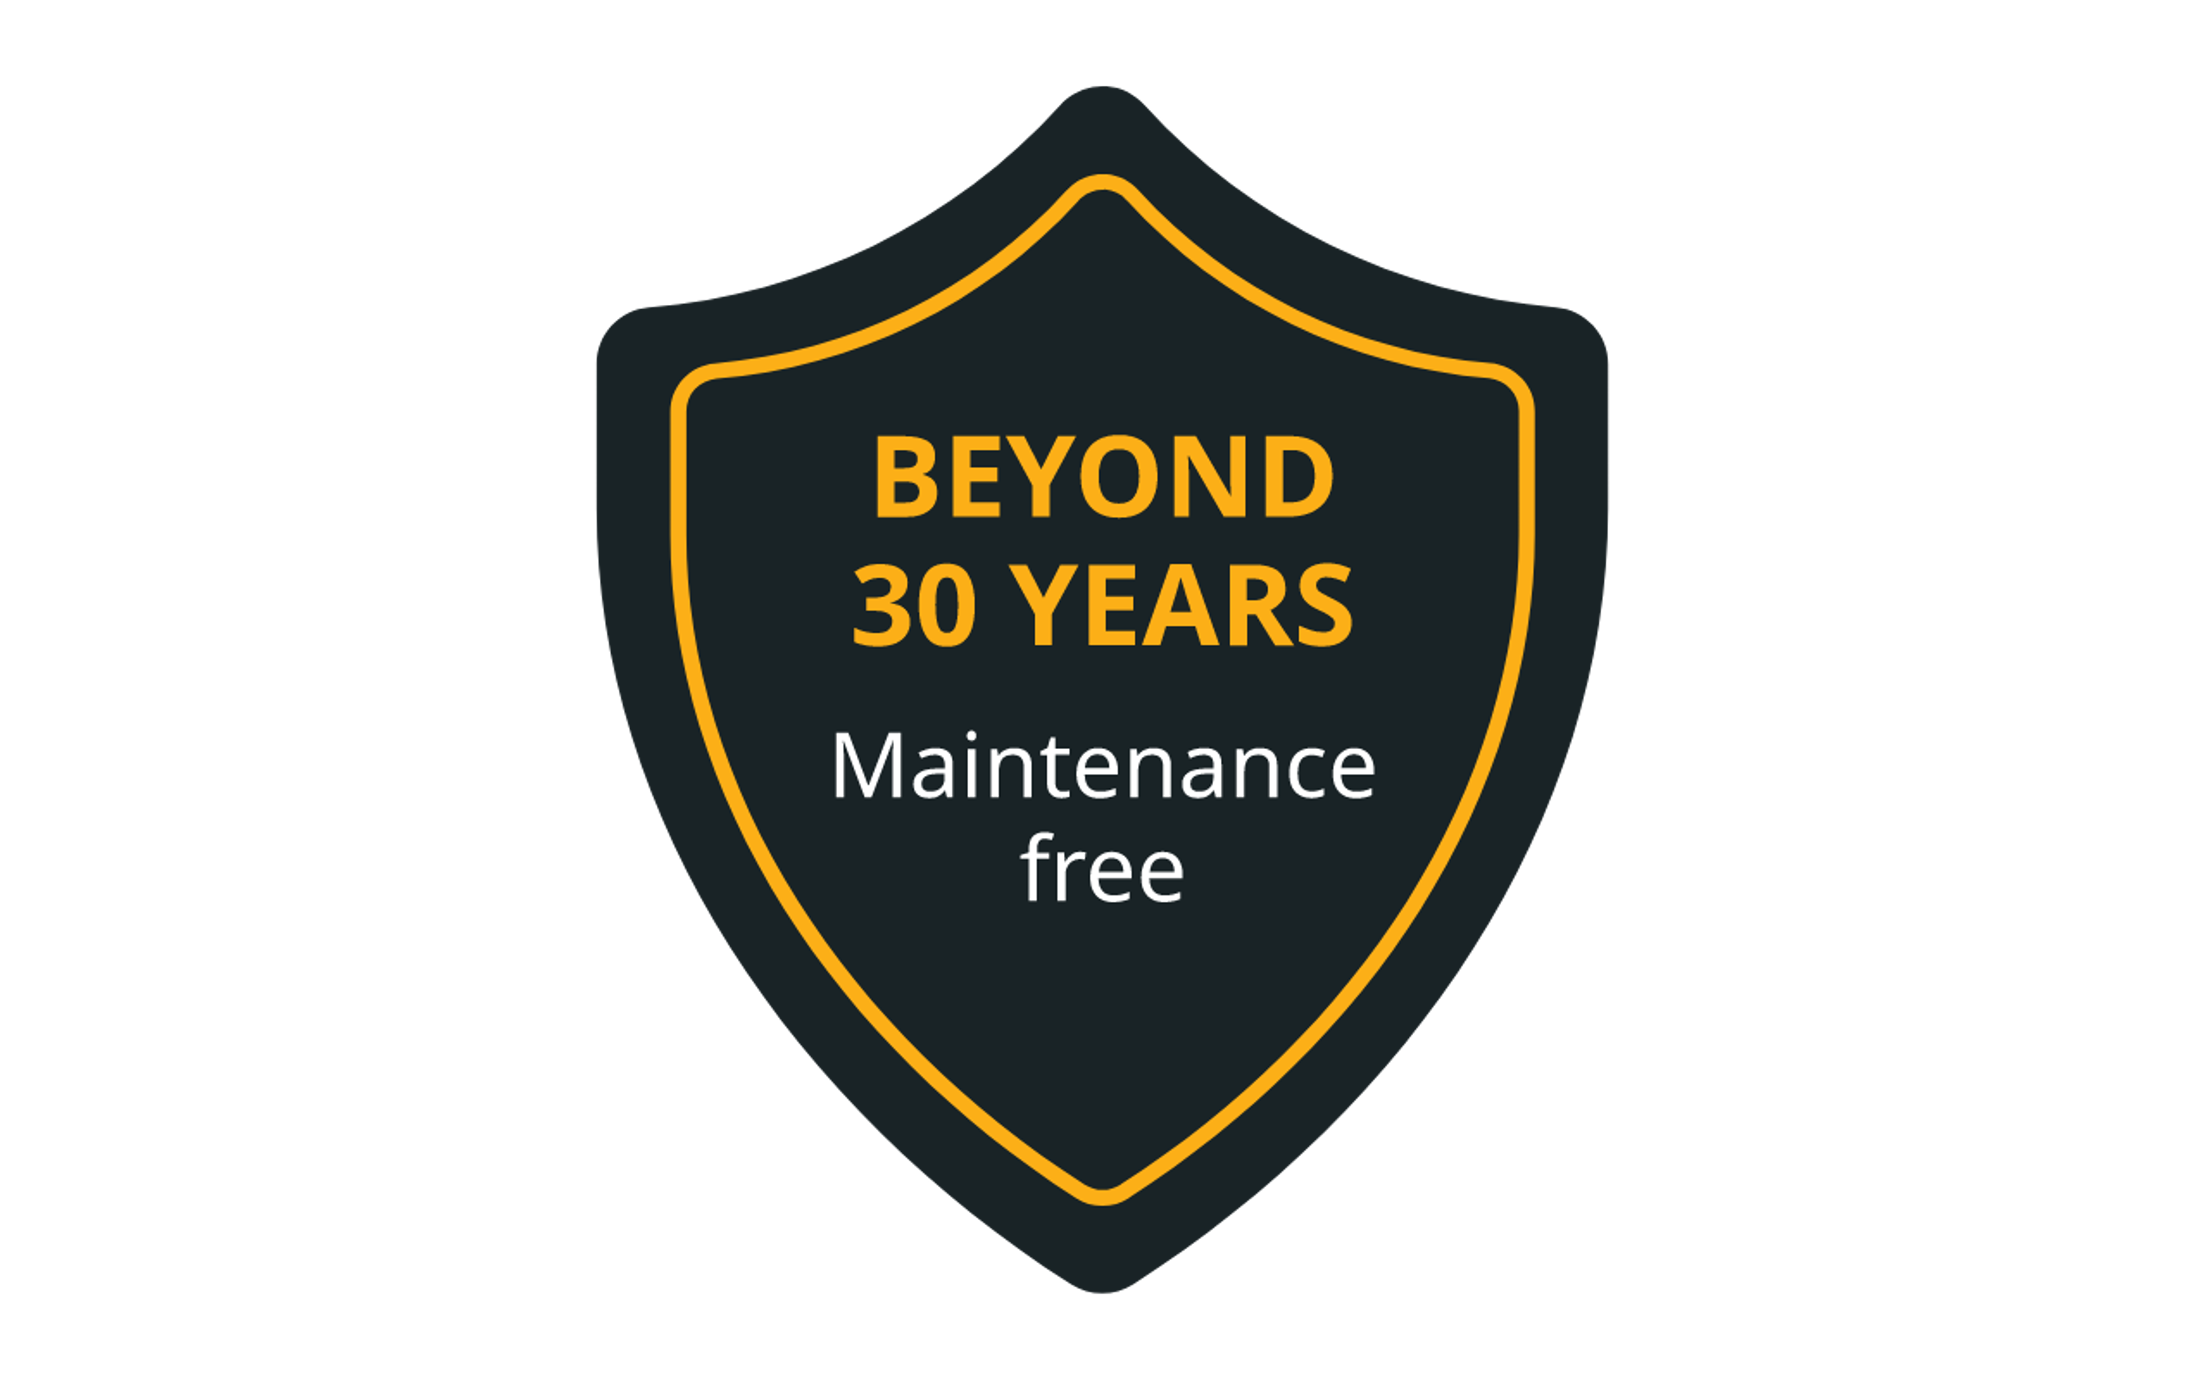 Maintenance free beyond 30 years